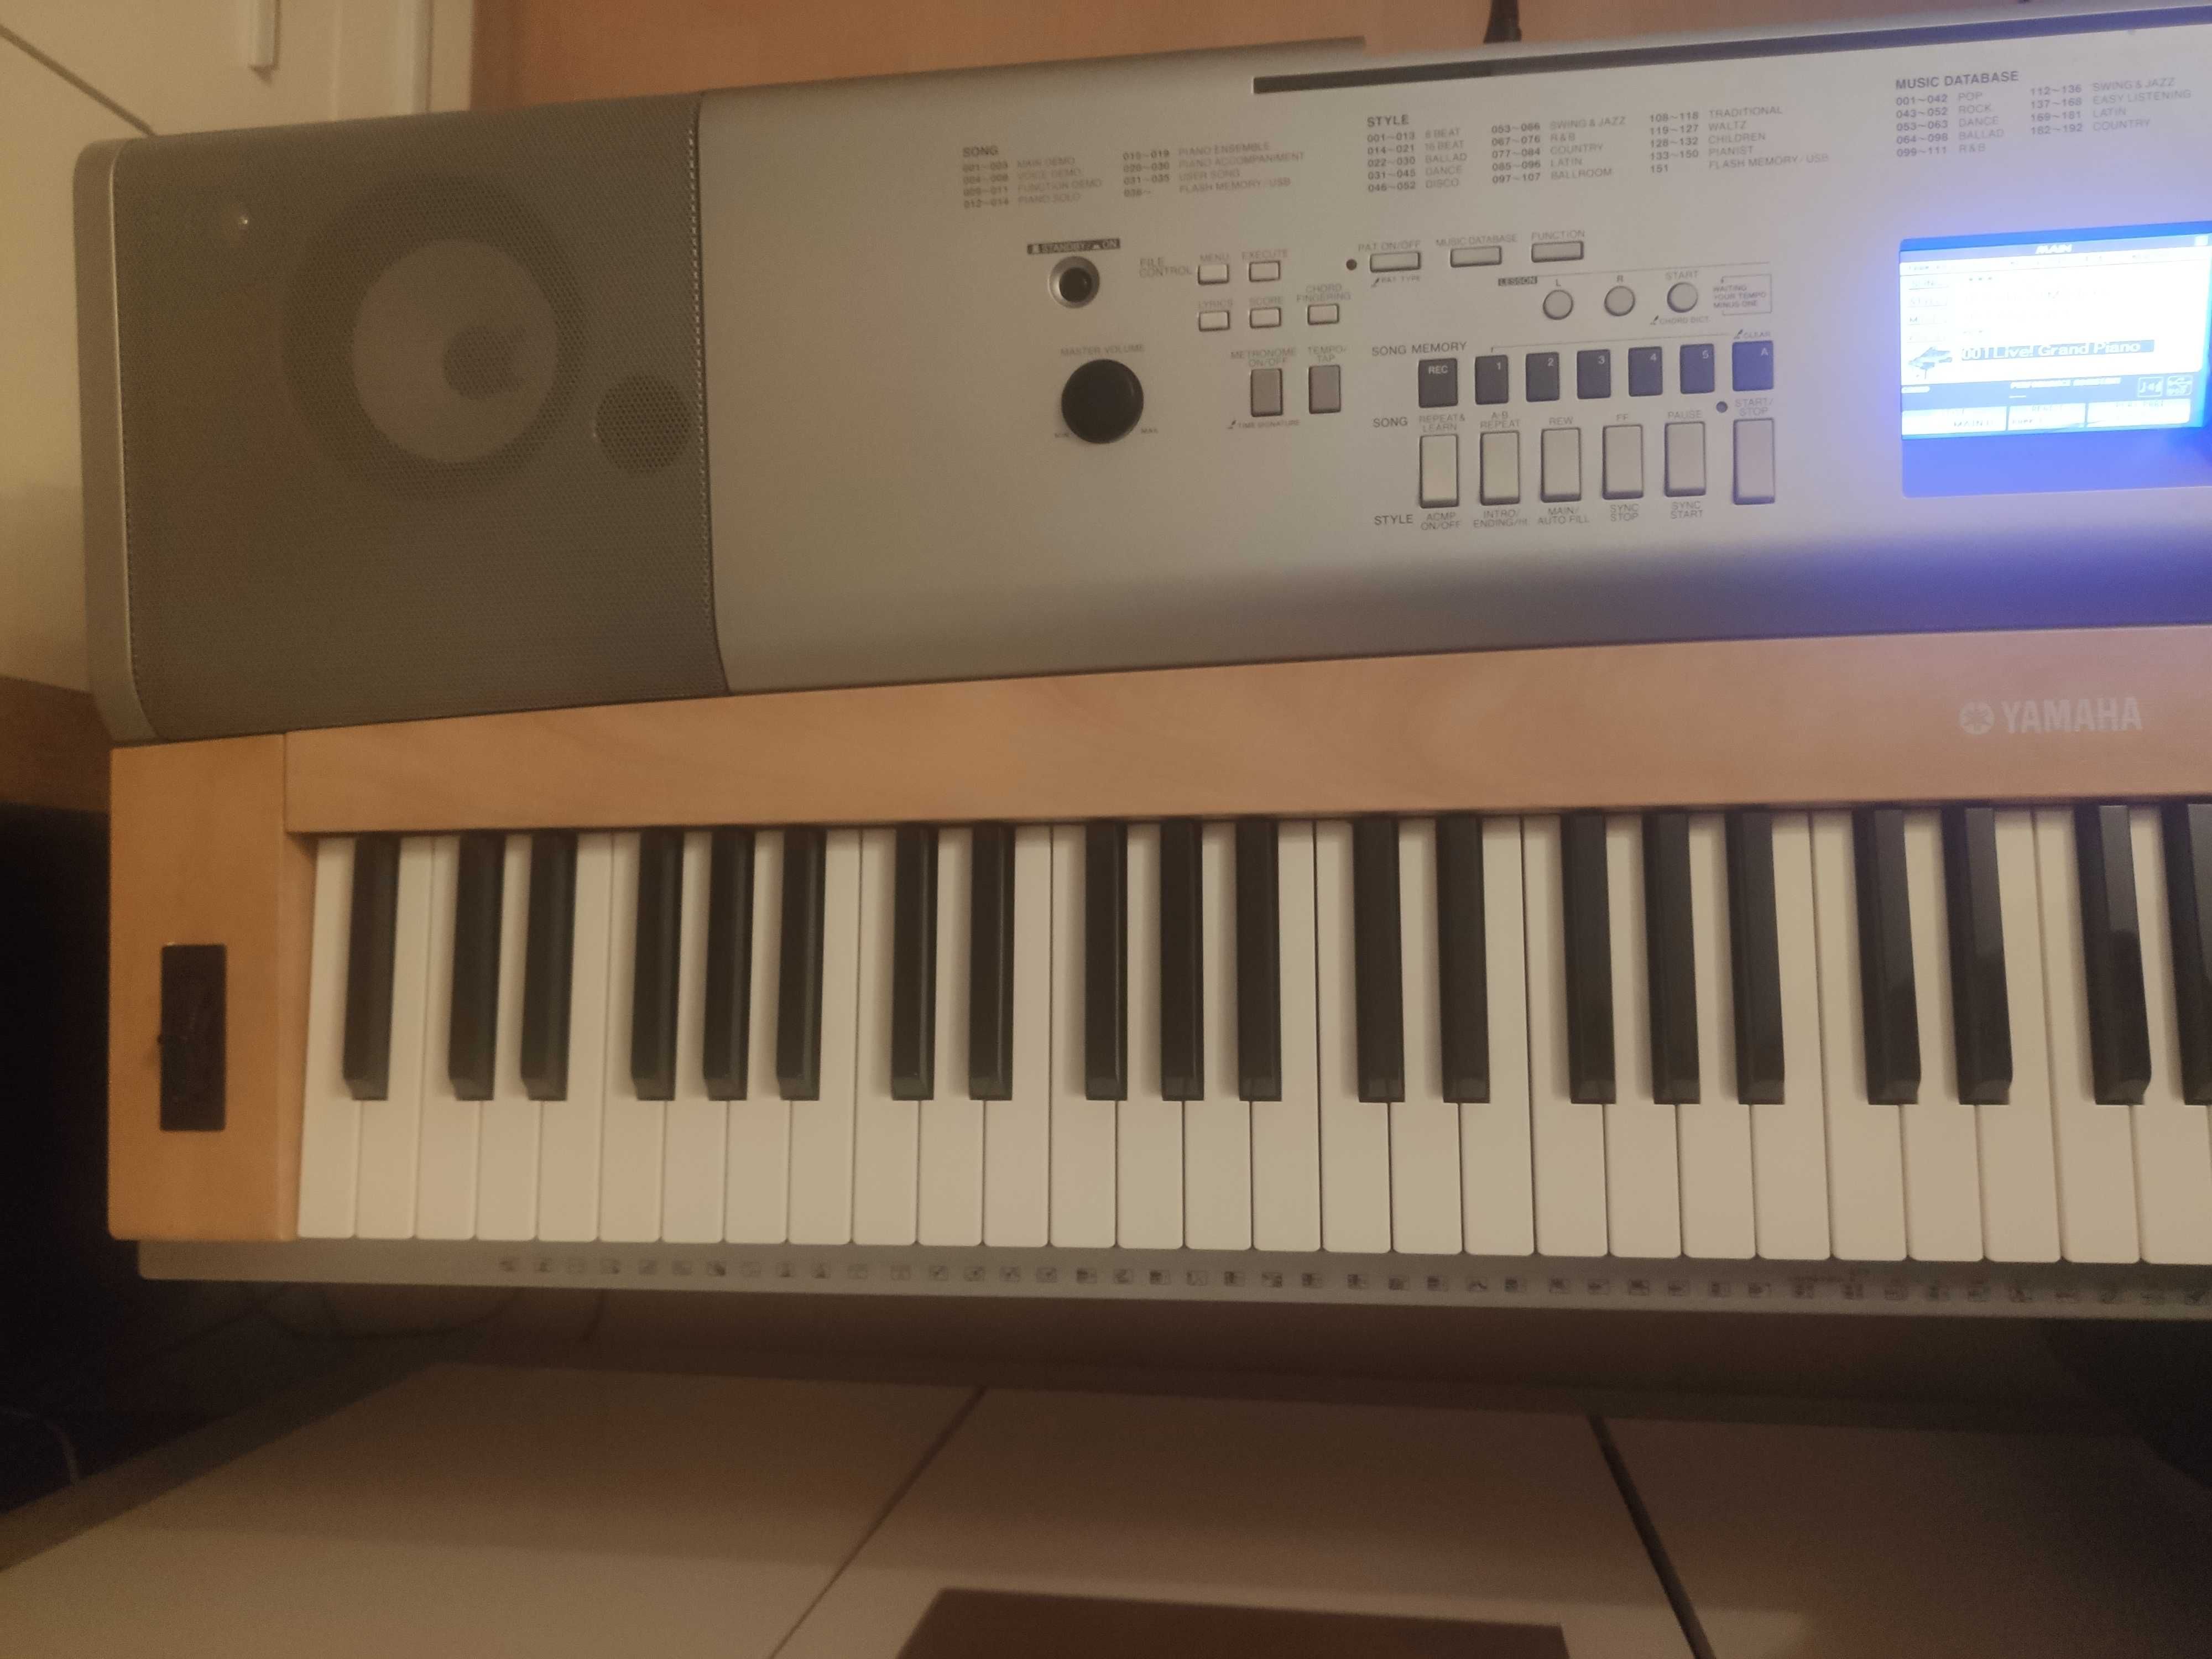 Yamaha DGX-620 Digital Piano